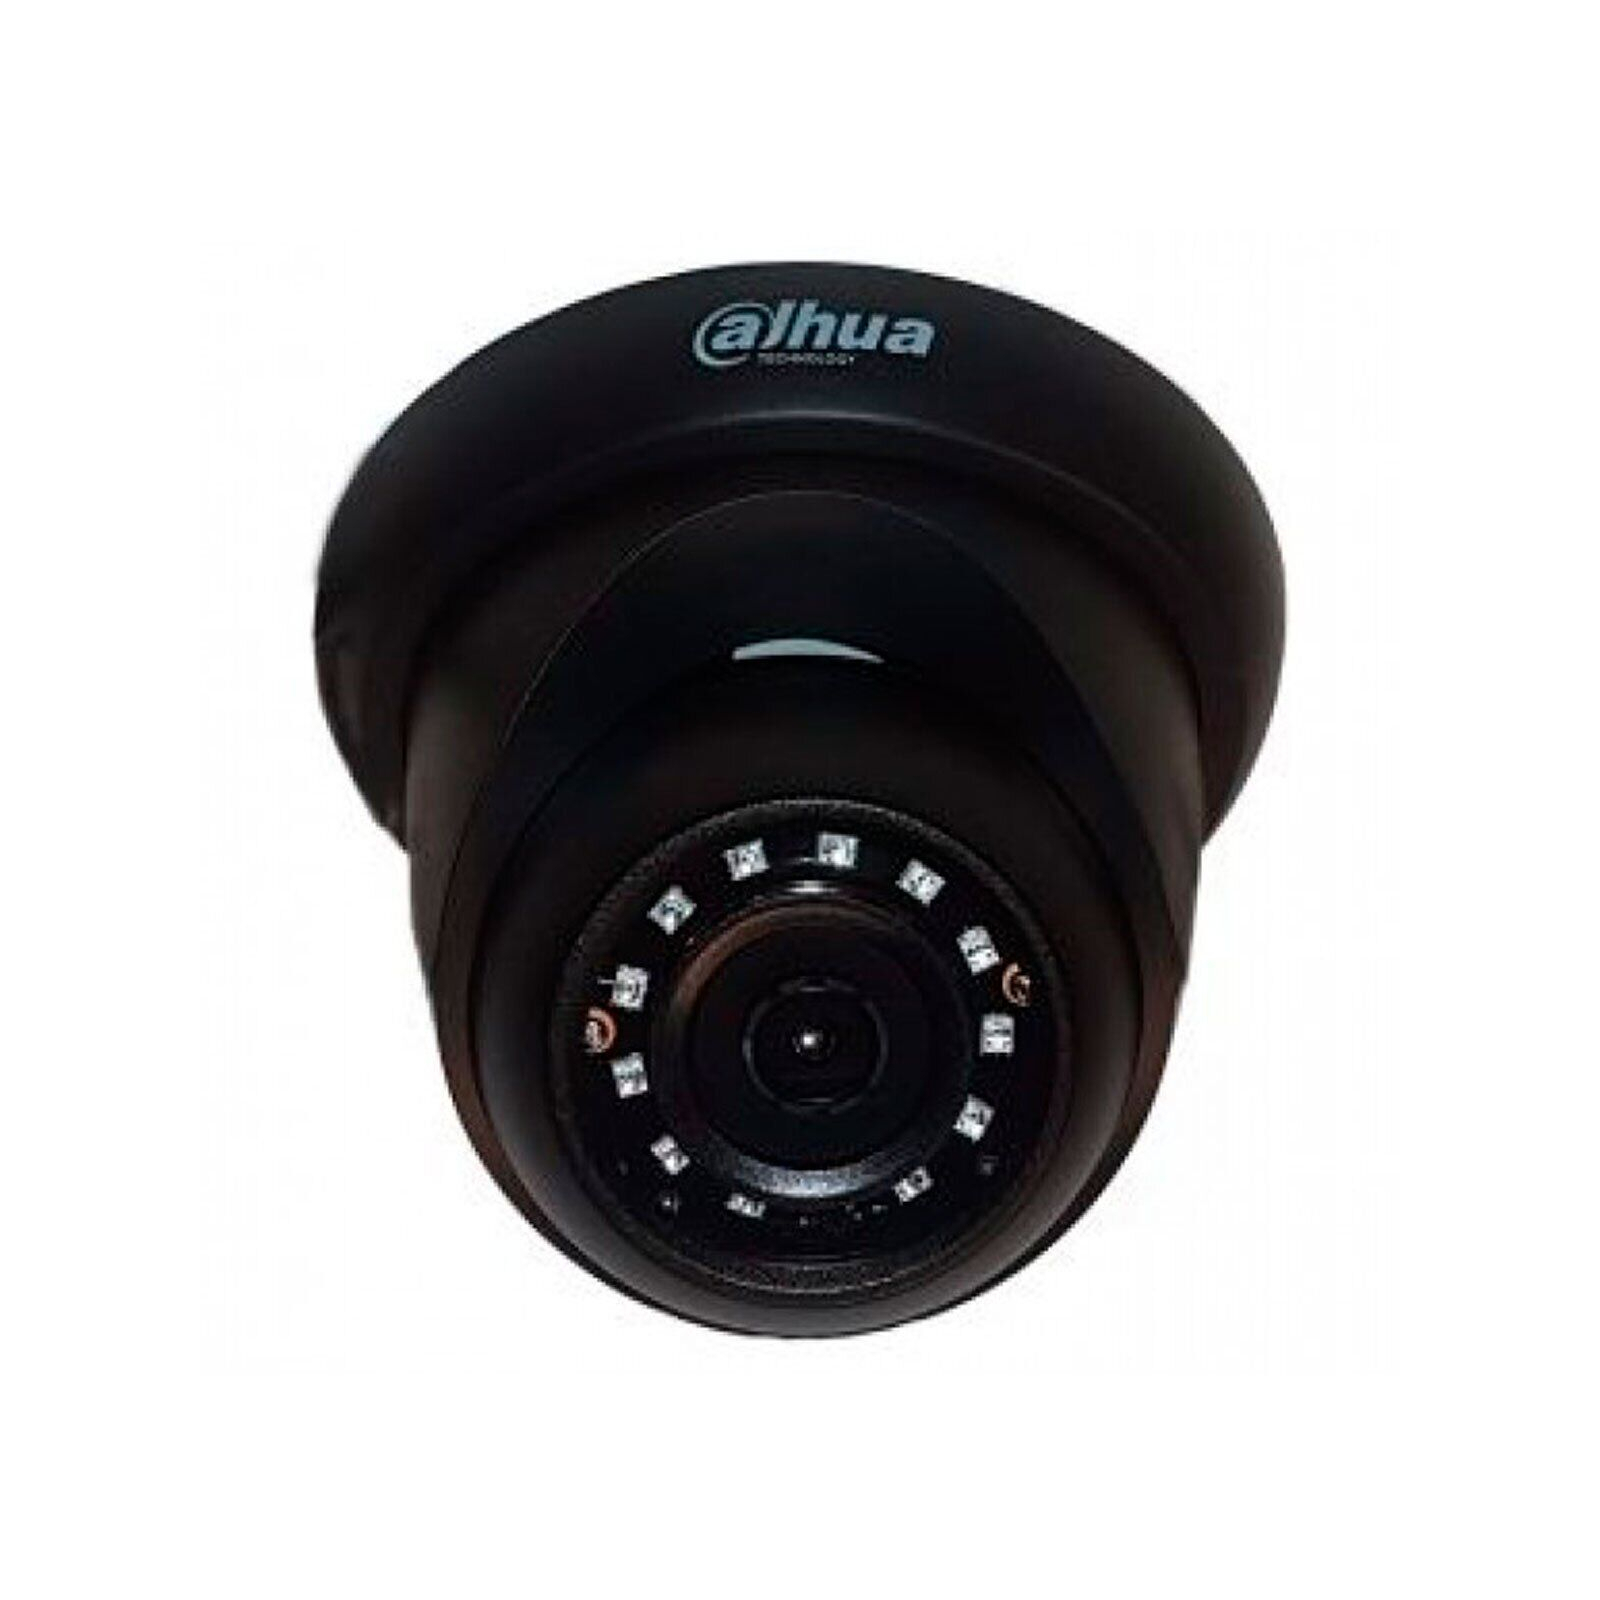 Камера видеонаблюдения Dahua DH-HAC-HDW1200RP-BE (2.8)